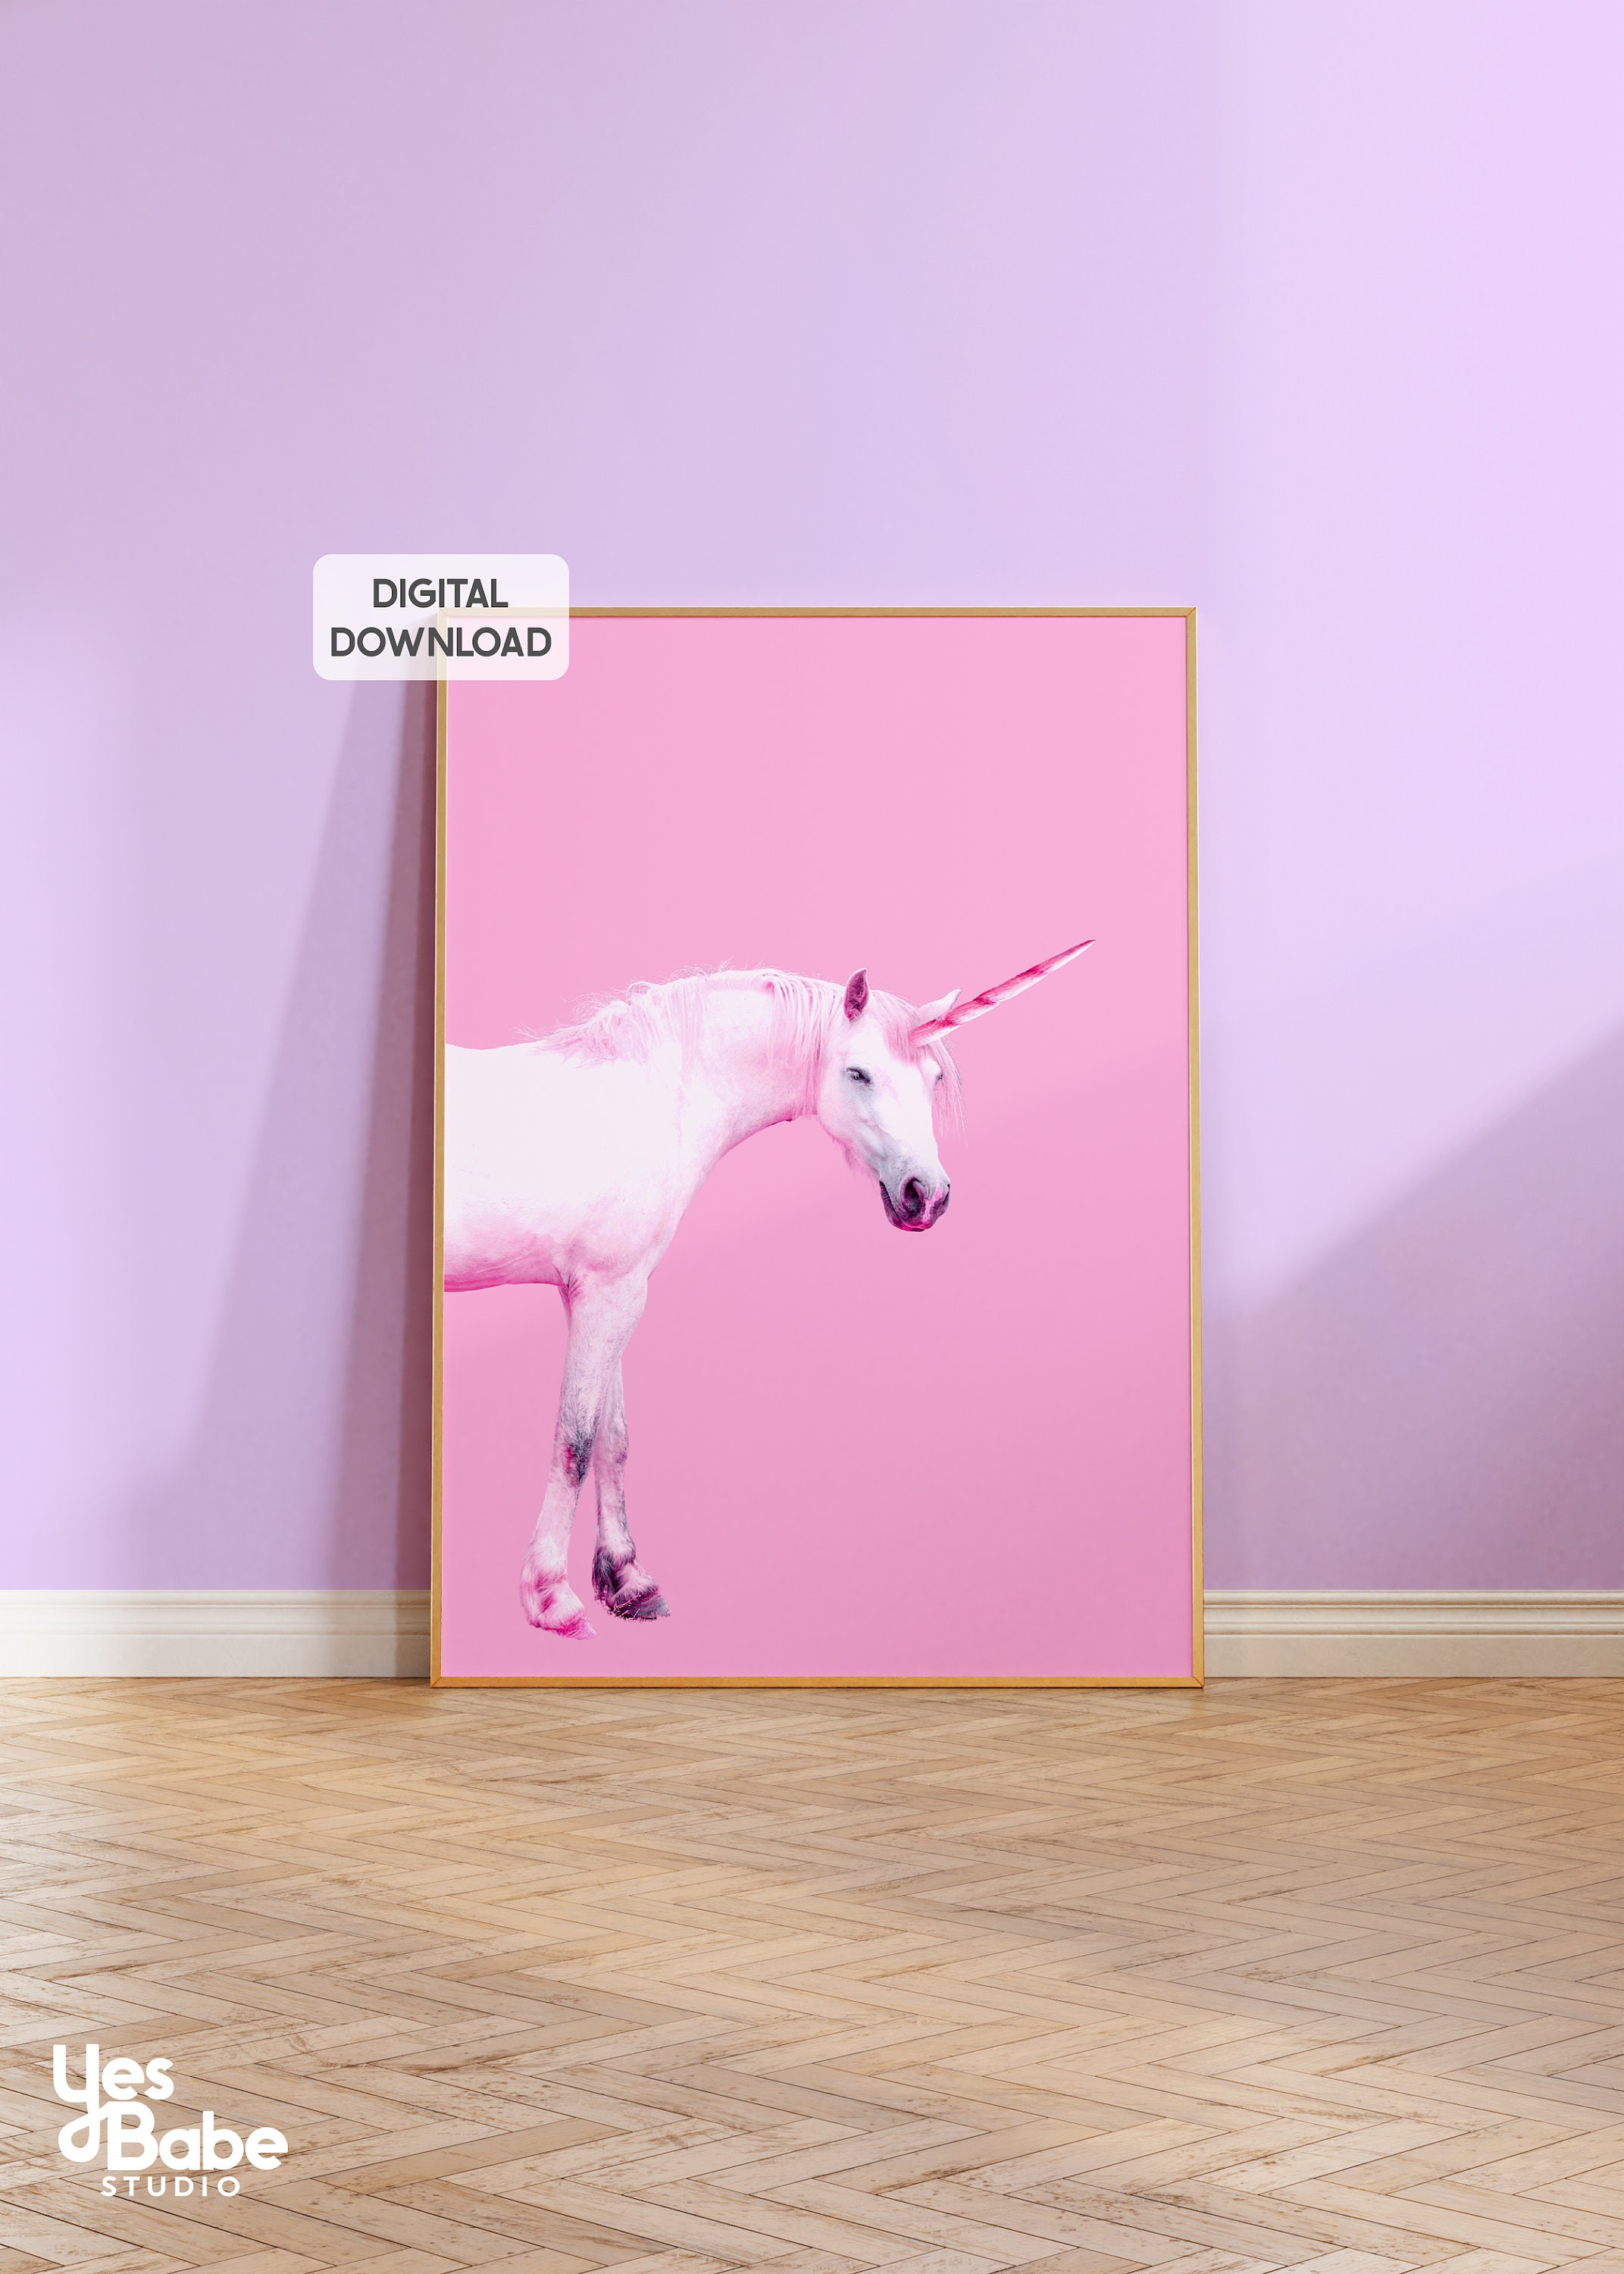 Illustration Pink Unicorn, Digital Wall Art